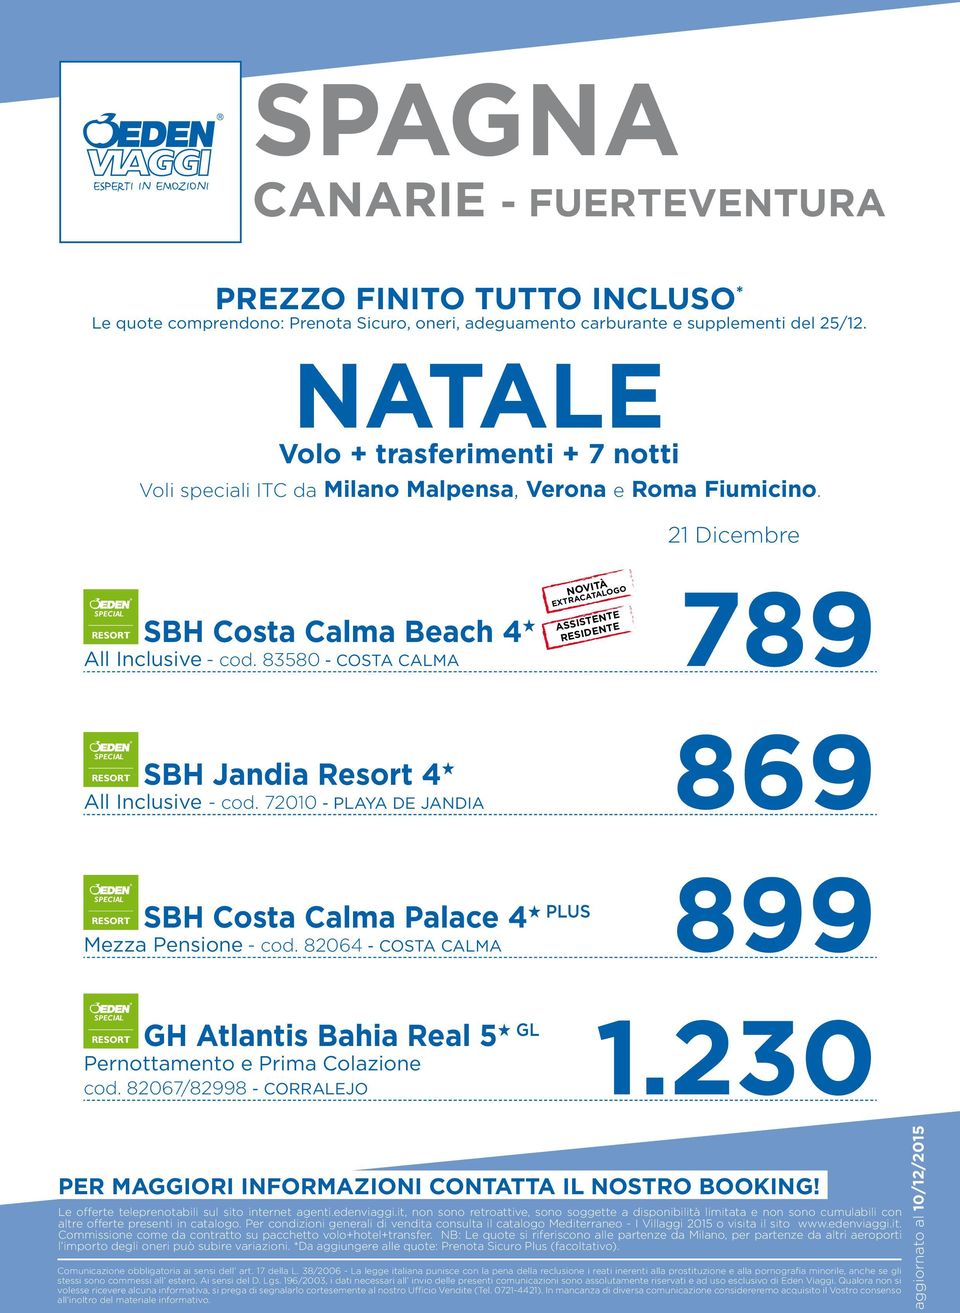 83580 - COSTA CALMA ASSISTENTE RESIDENTE 869 RESORT SBH Jandia Resort 4 H All Inclusive - cod. 72010 - PLAYA DE JANDIA 899 RESORT SBH Costa Calma Palace 4 H PLUS Mezza Pensione - cod.